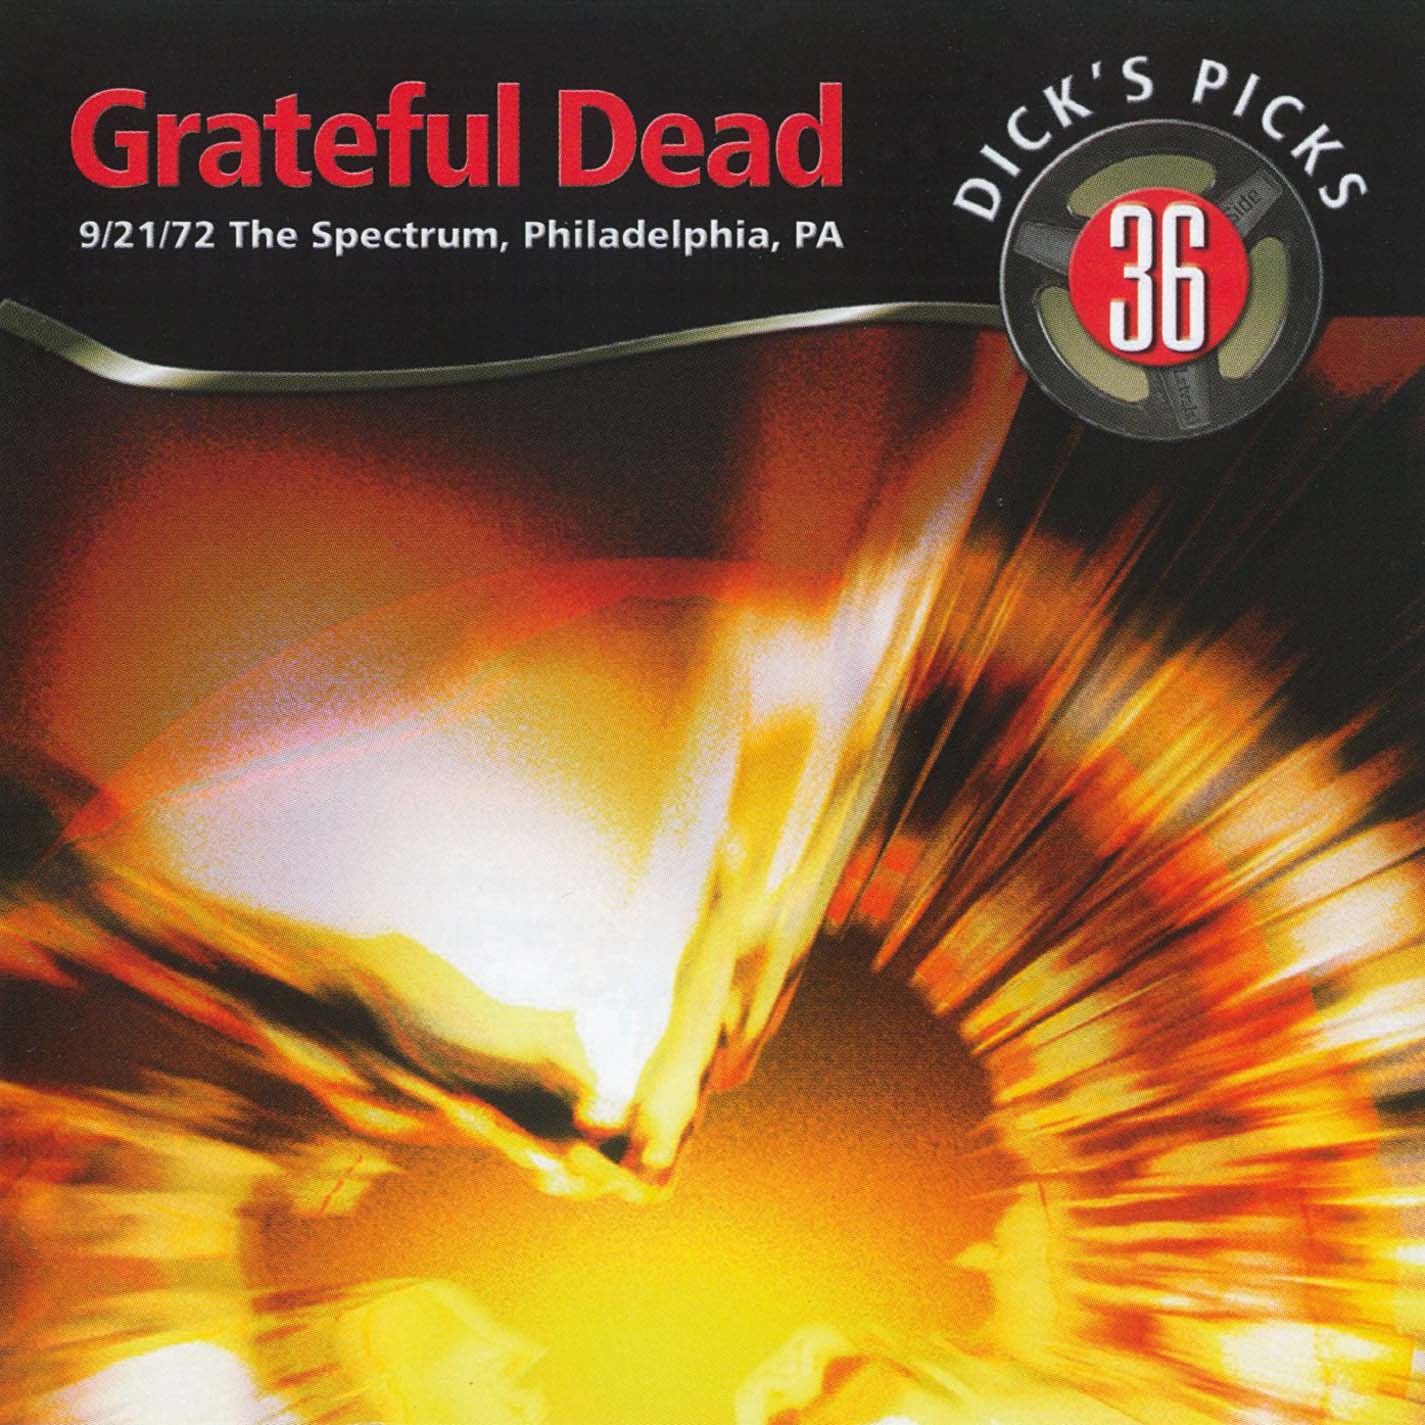 Grateful Dead Dick's Picks 36 album cover artwork